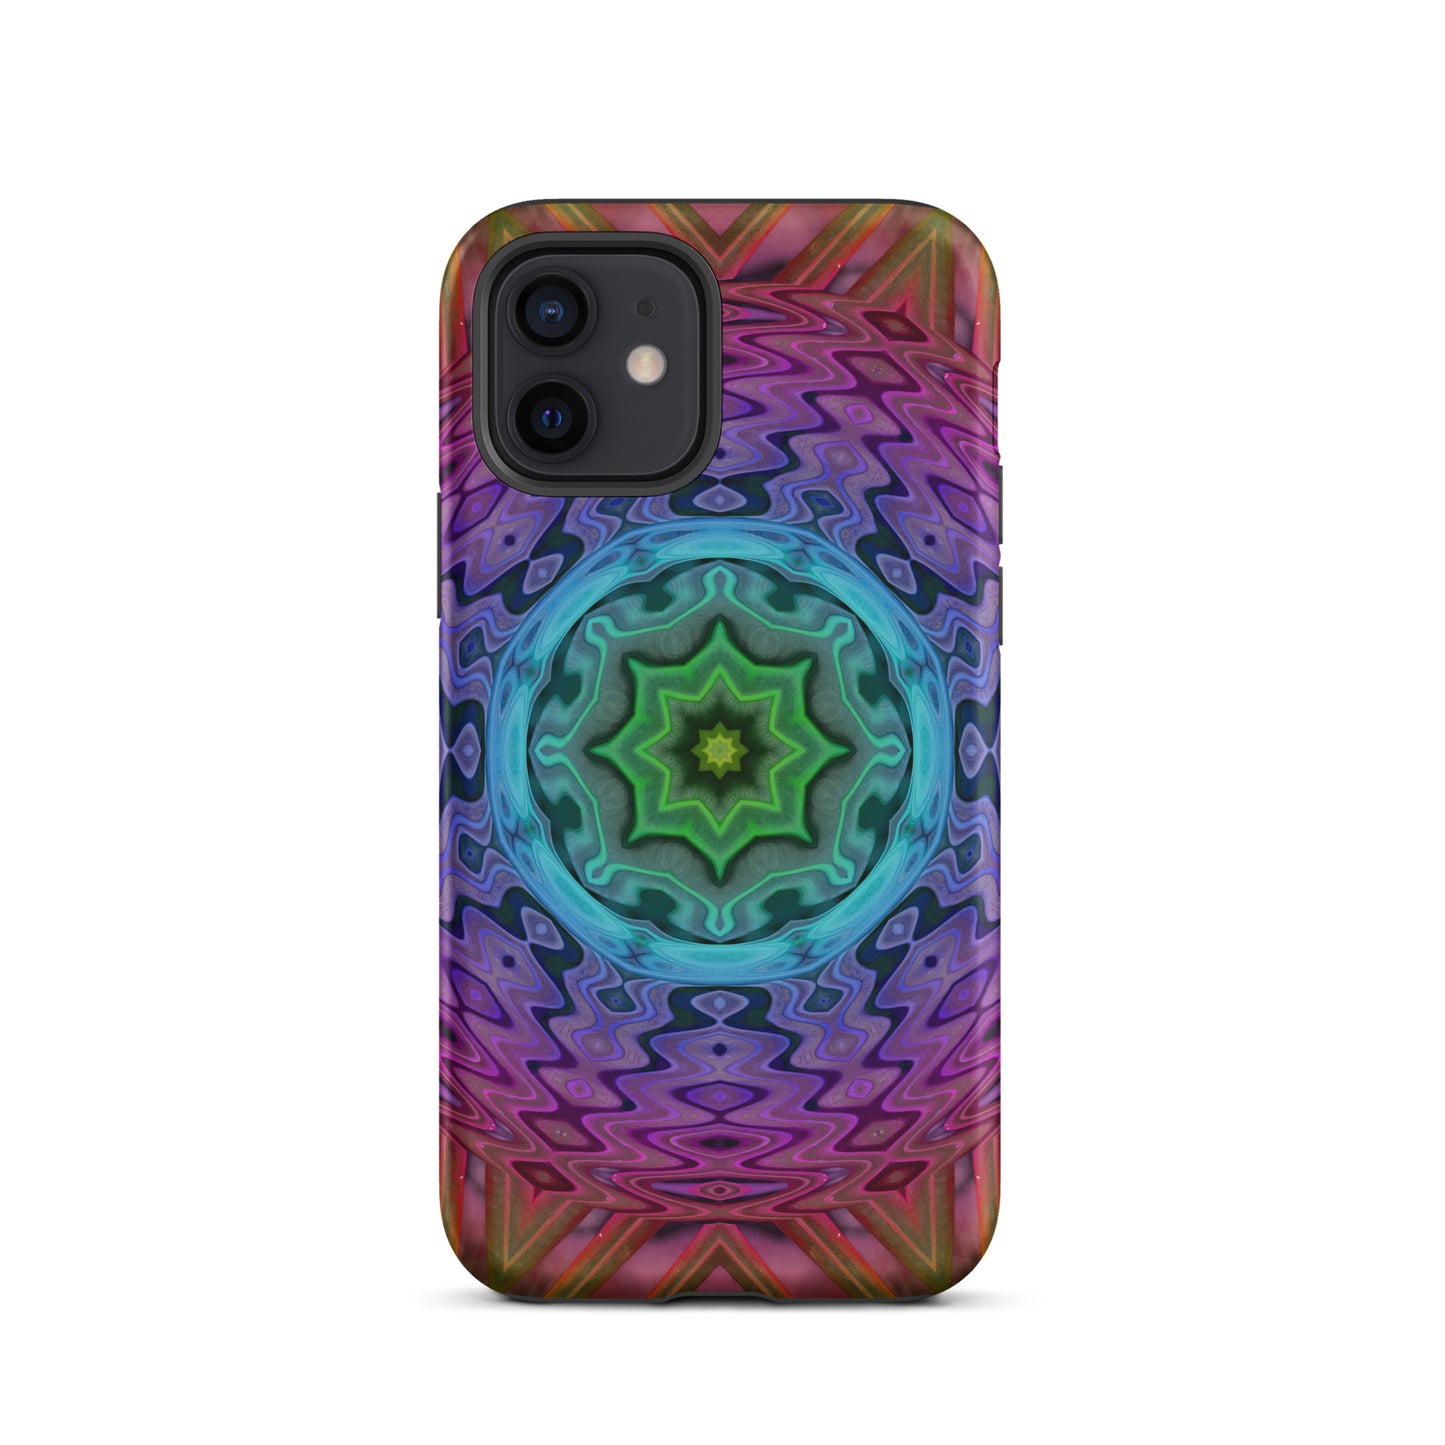 "Rainbow Abode" Tough iPhone case